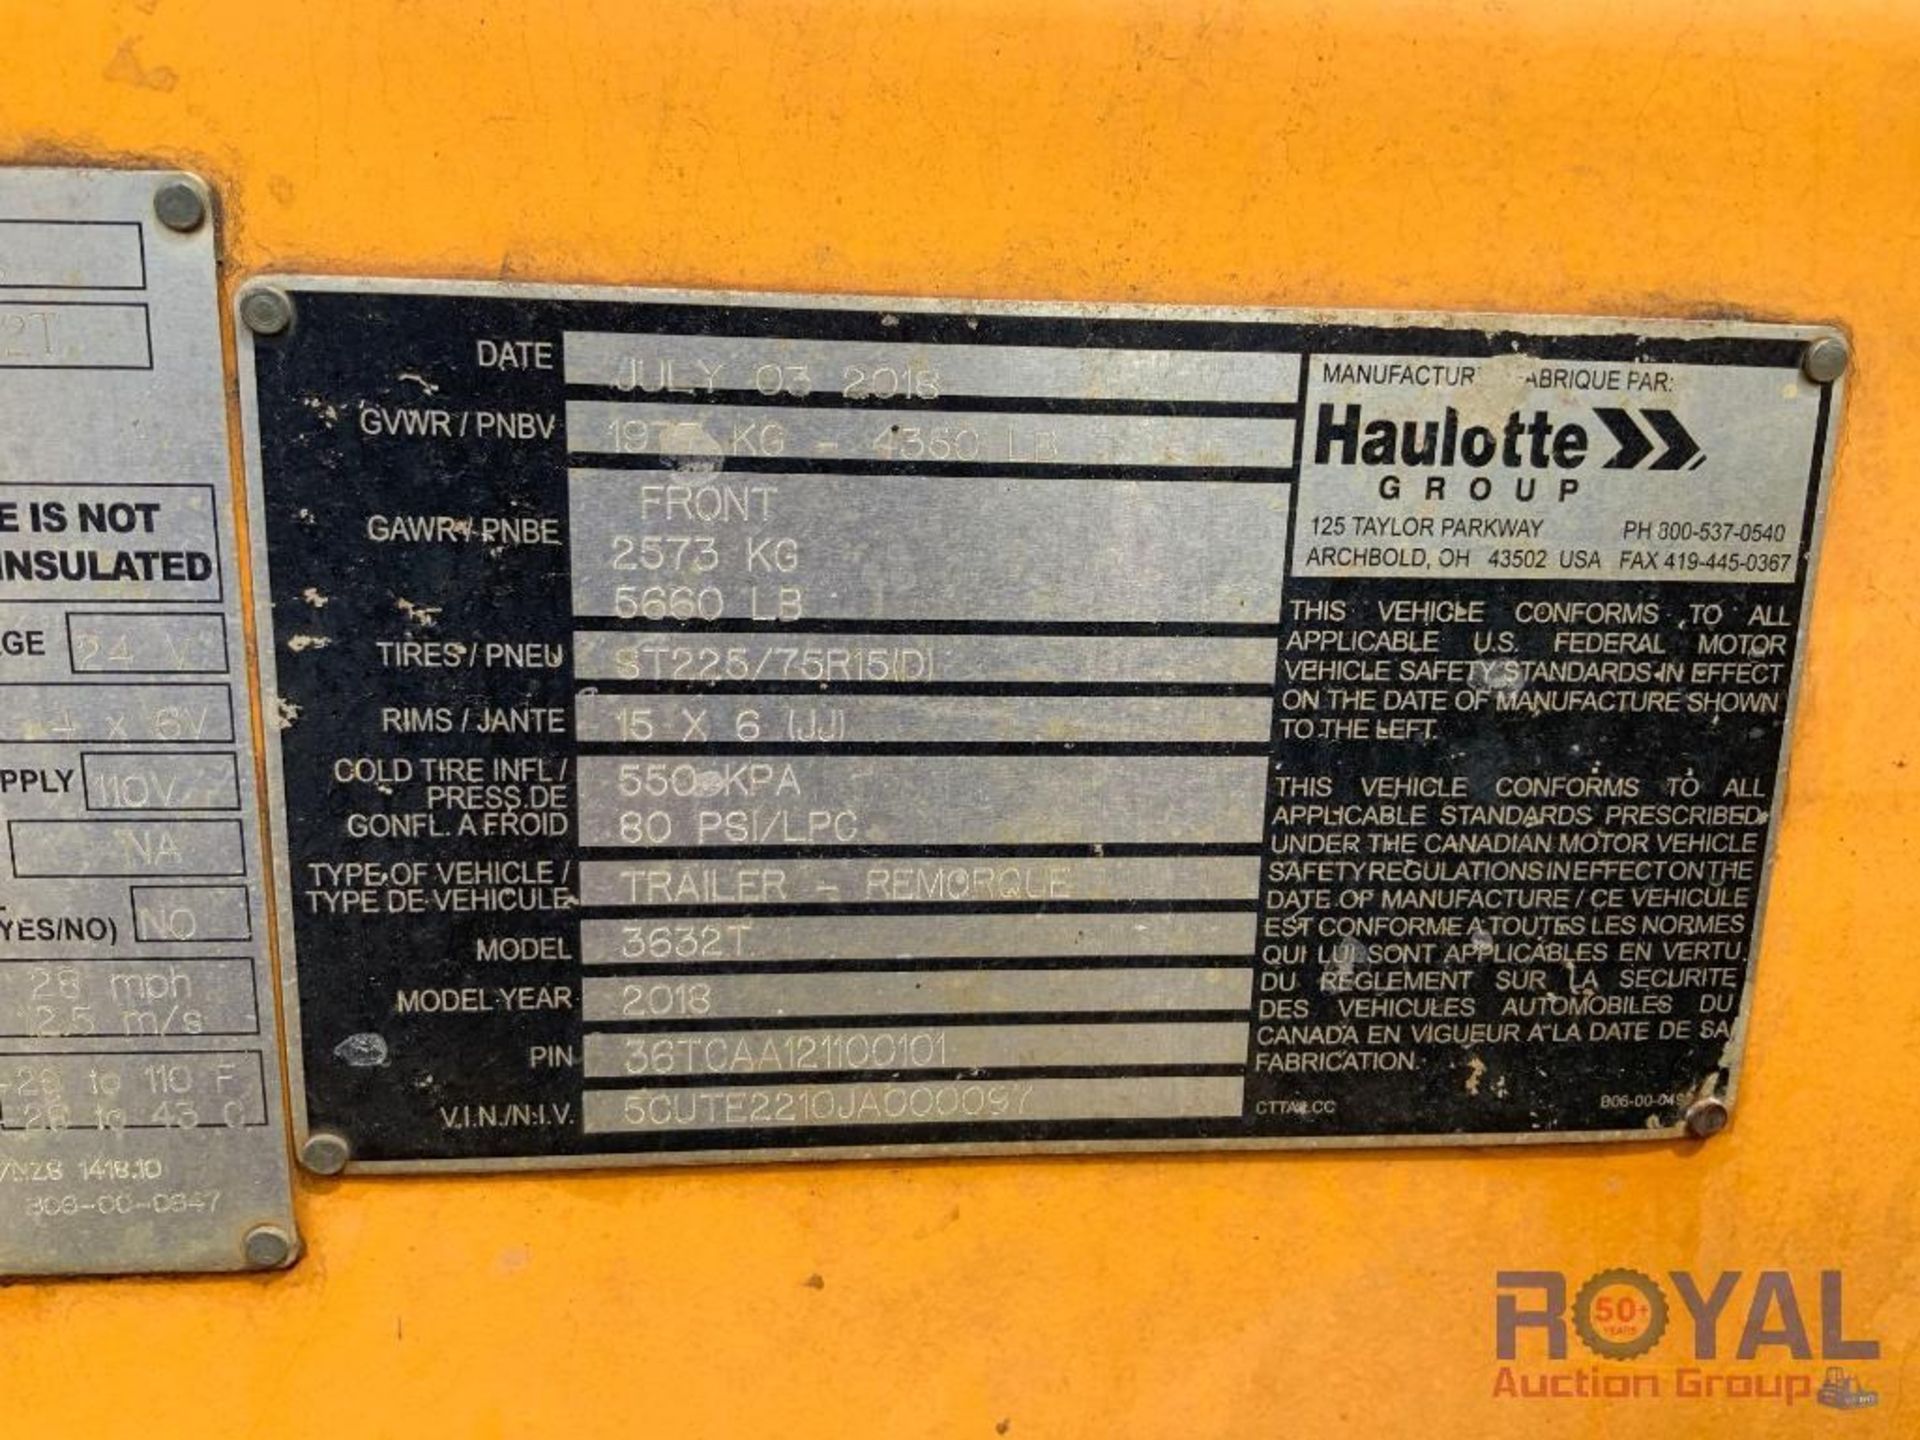 2018 Haulotte 3632T 37FT Towable Man Lift - Image 6 of 22